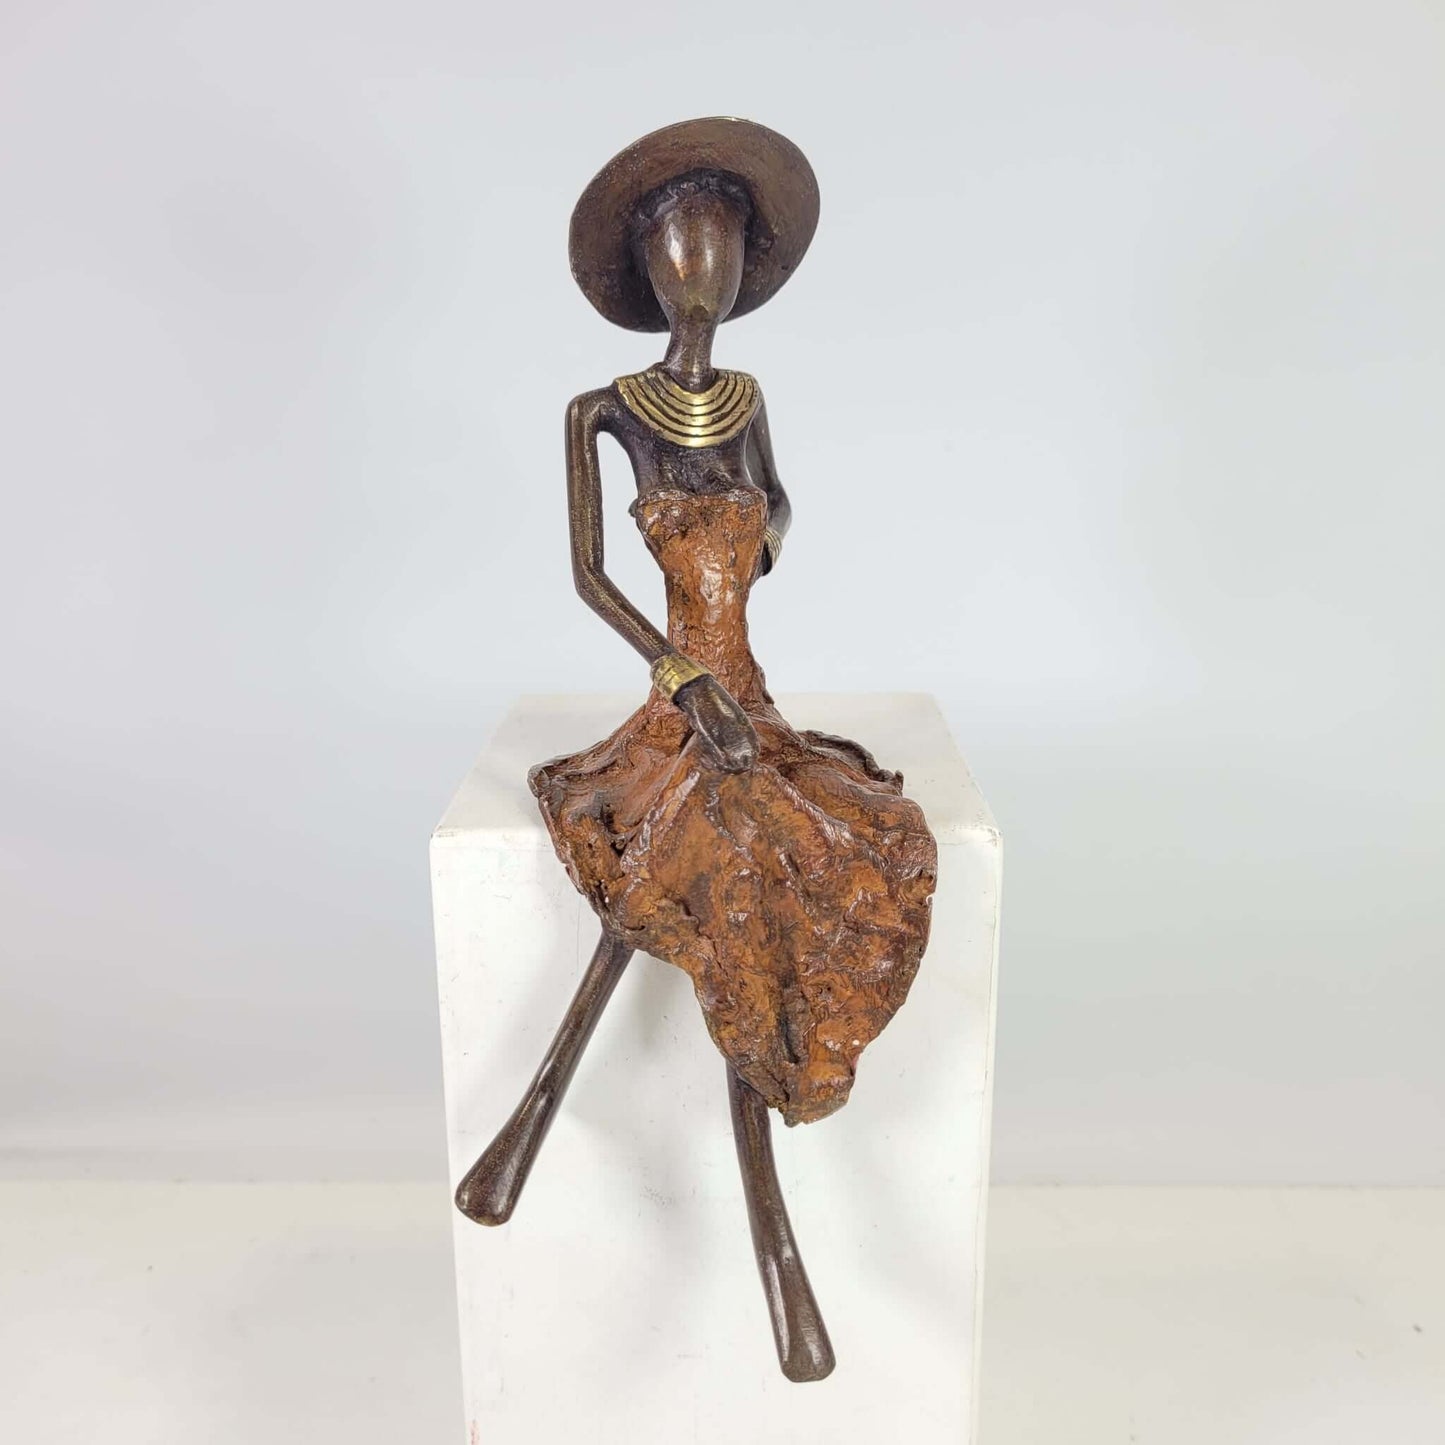 Bronze-Skulptur "Femme assise avec chapeau" by Soré | verschiedene Größen und Farben